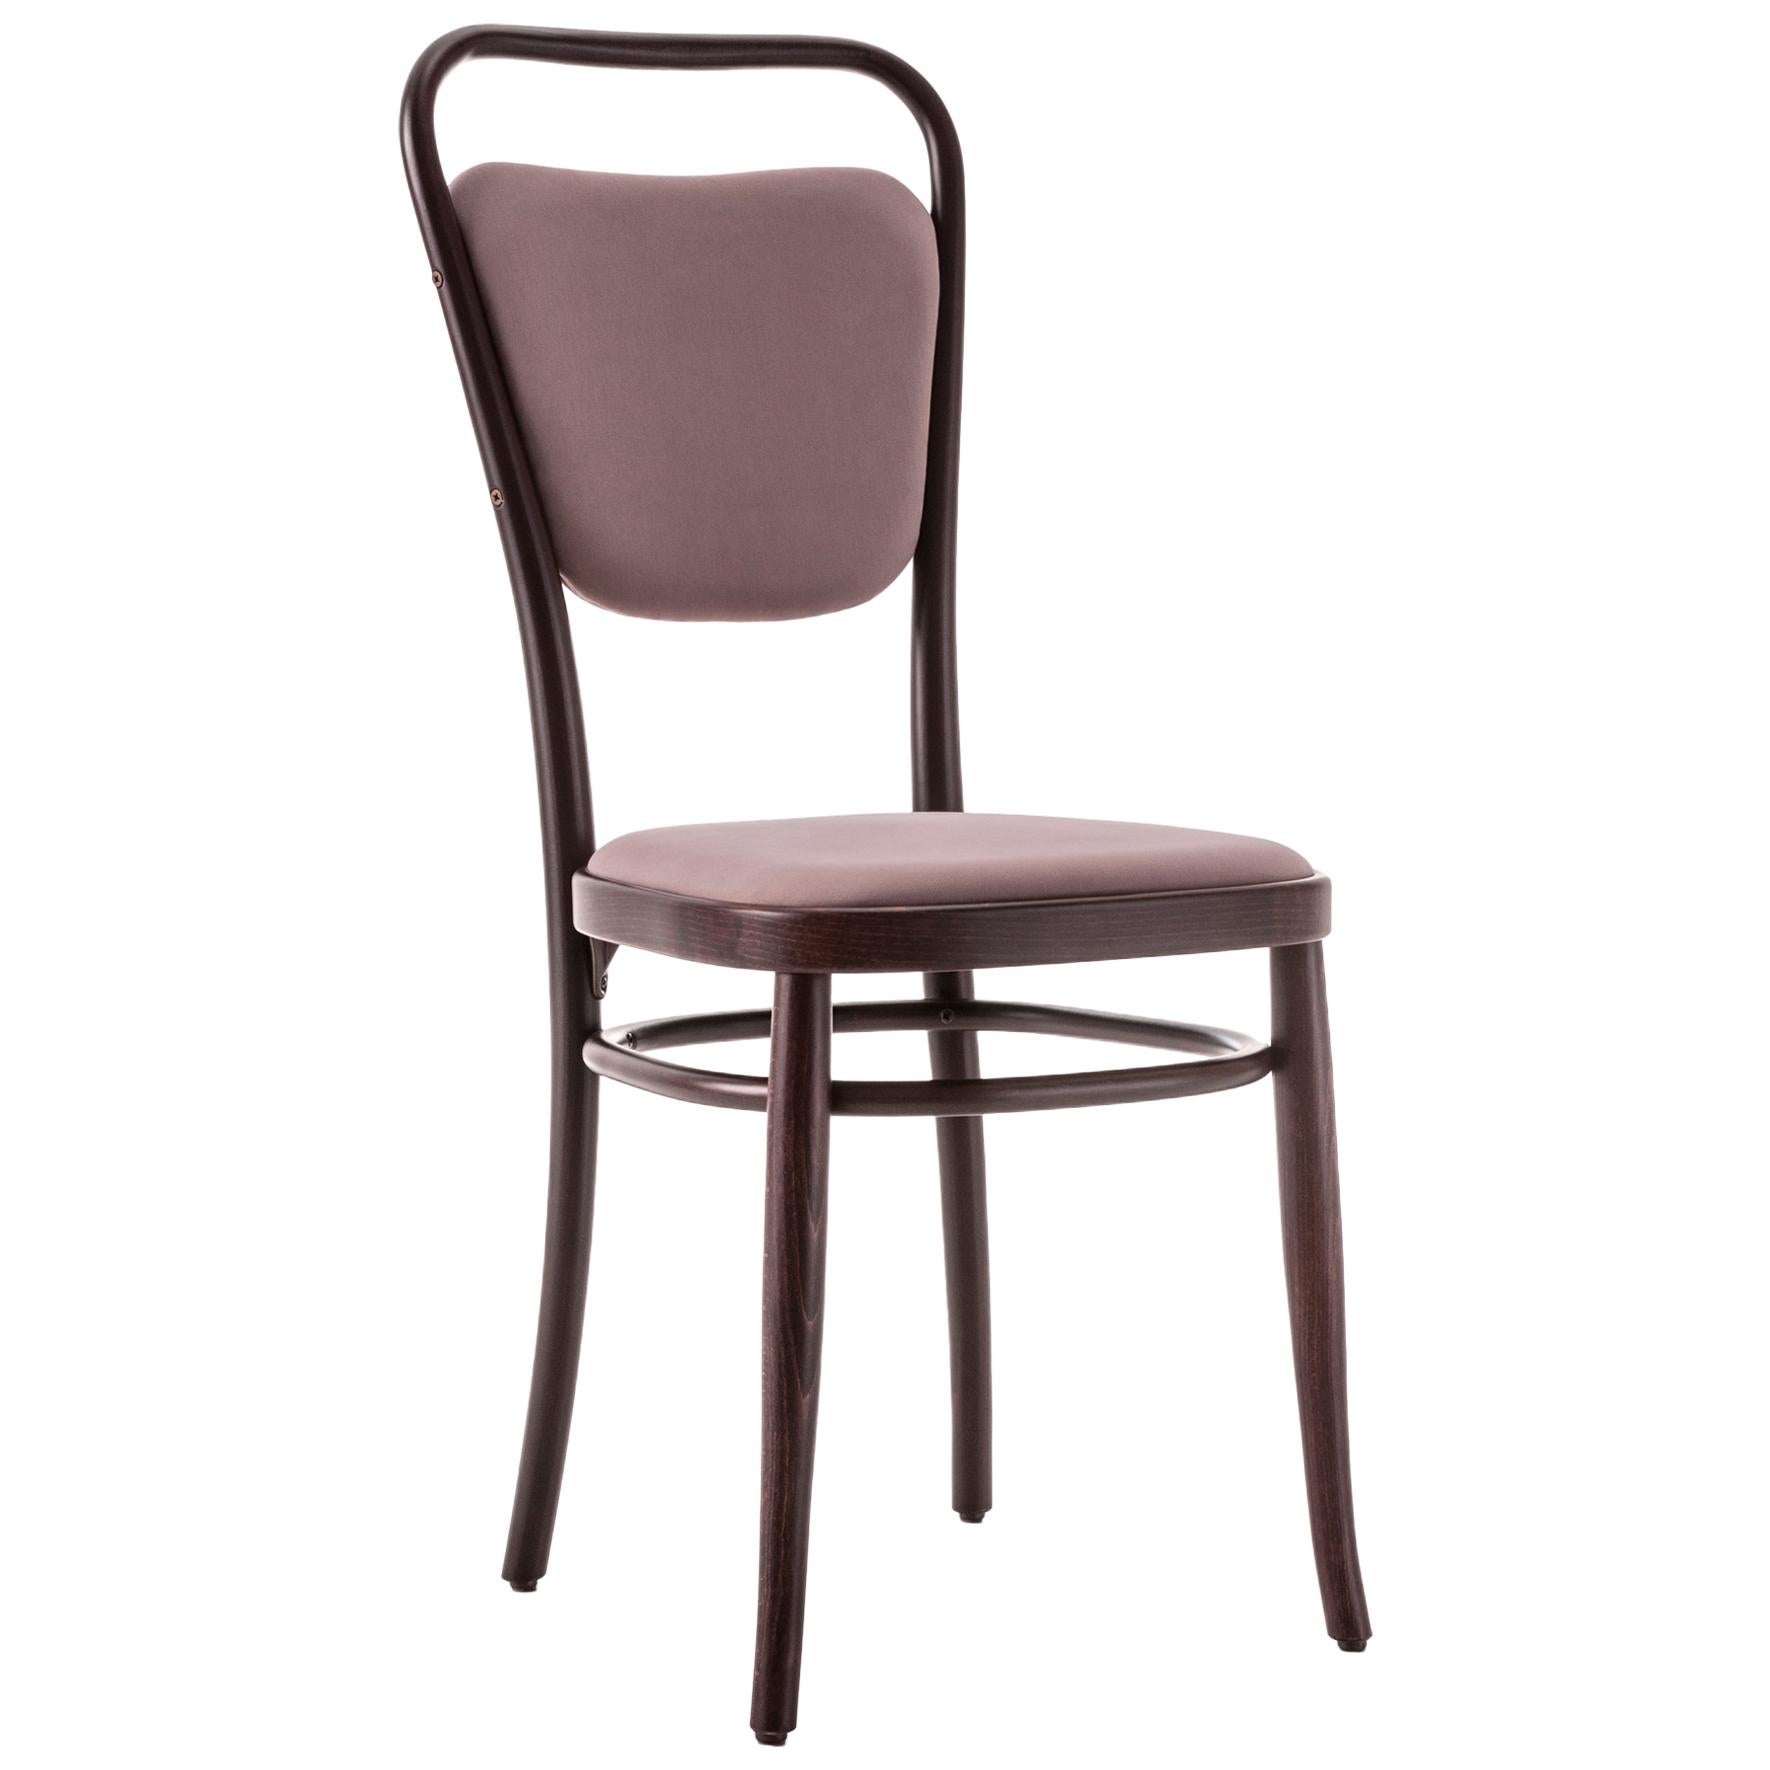 Gebrüder Thonet Vienna GmbH Wiener 144 Chair in Walnut with Upholstered Seat For Sale